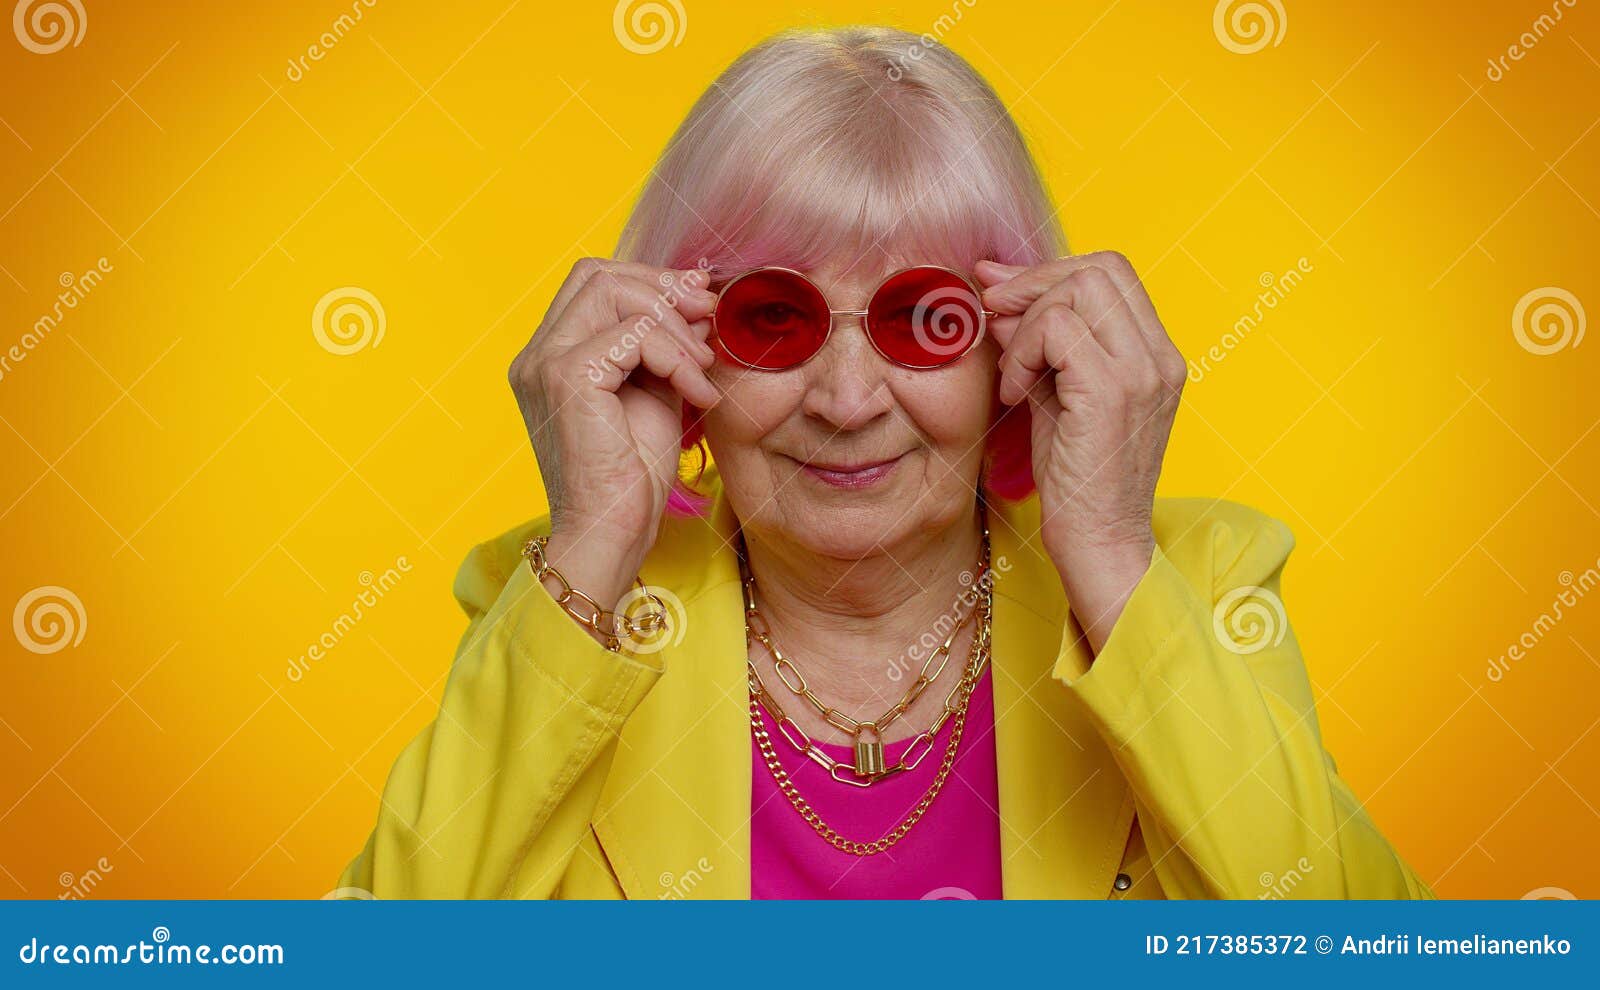 Hot Older Granny